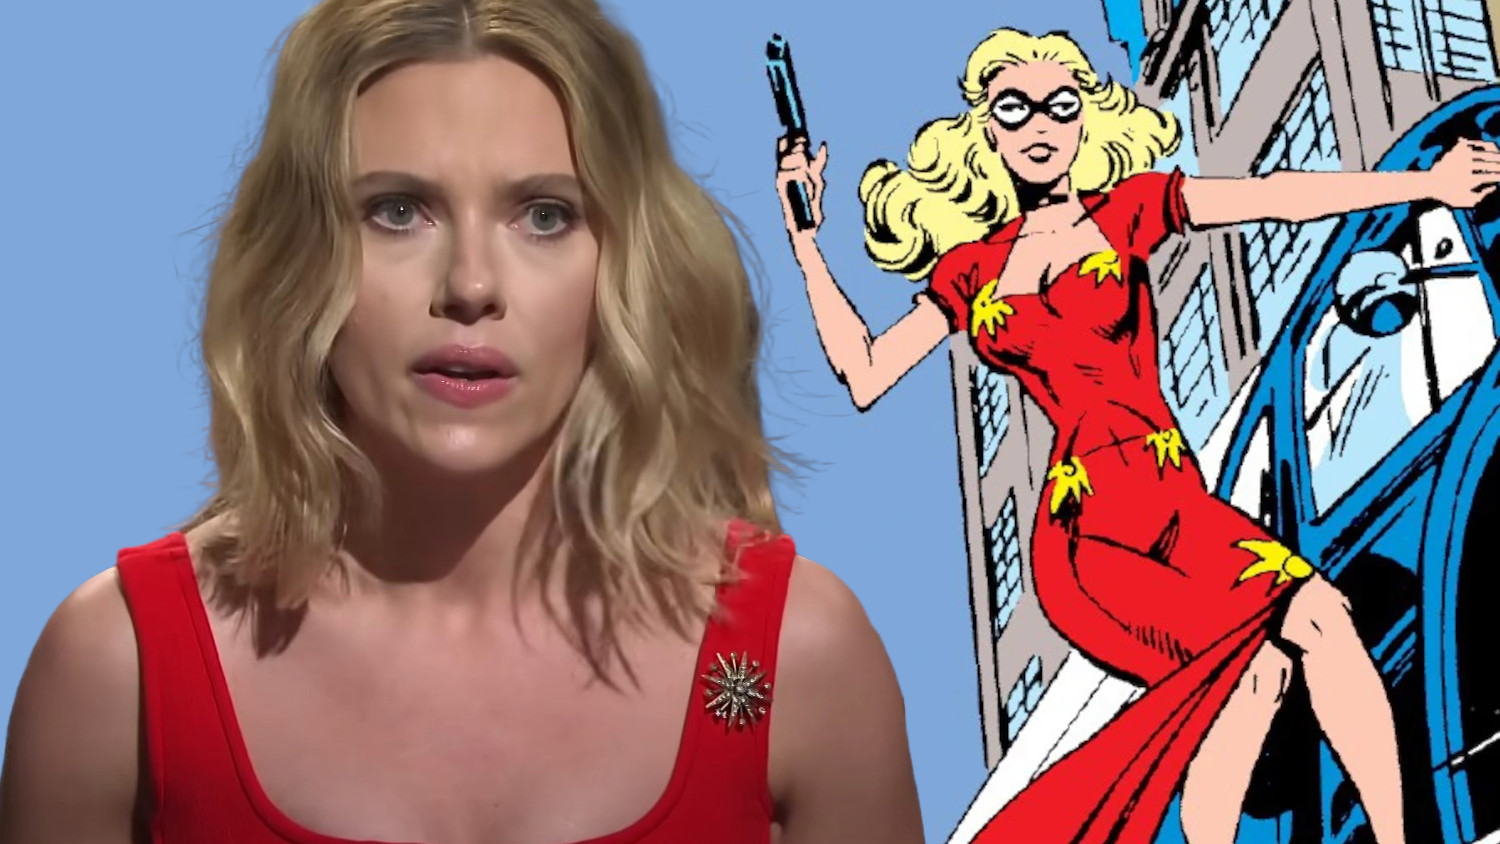 Scarlett Johansson’s Secret Marvel Series Sounds Like Another Feminist #MeToo Project